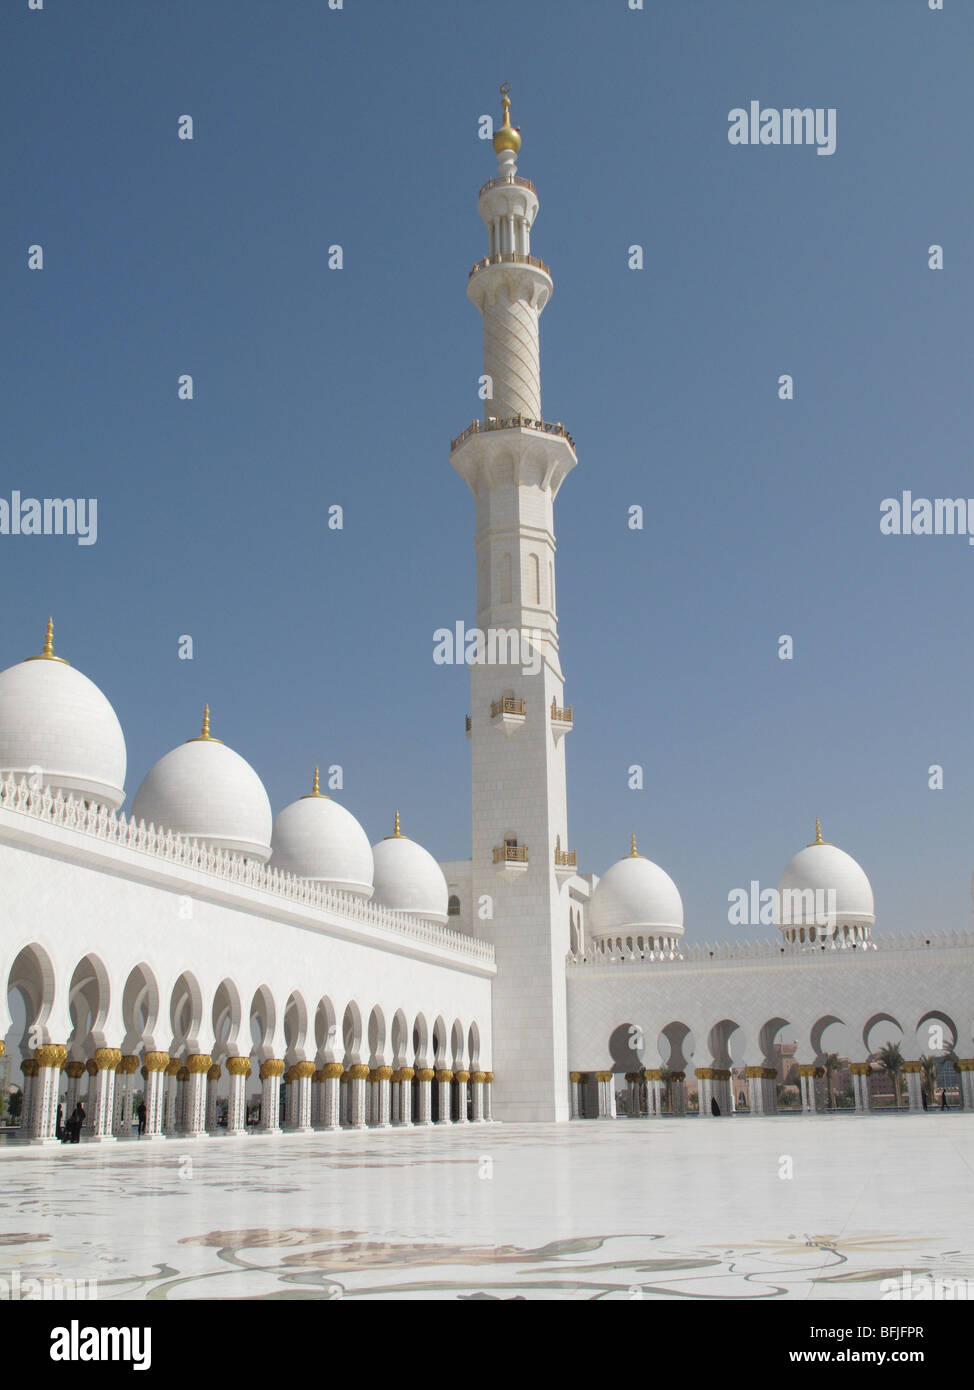 Minarett, cúpula y pasarela de Sheikh Zayed Bin Sultan Al Nahyan, la Mezquita Abu Dhabi Foto de stock